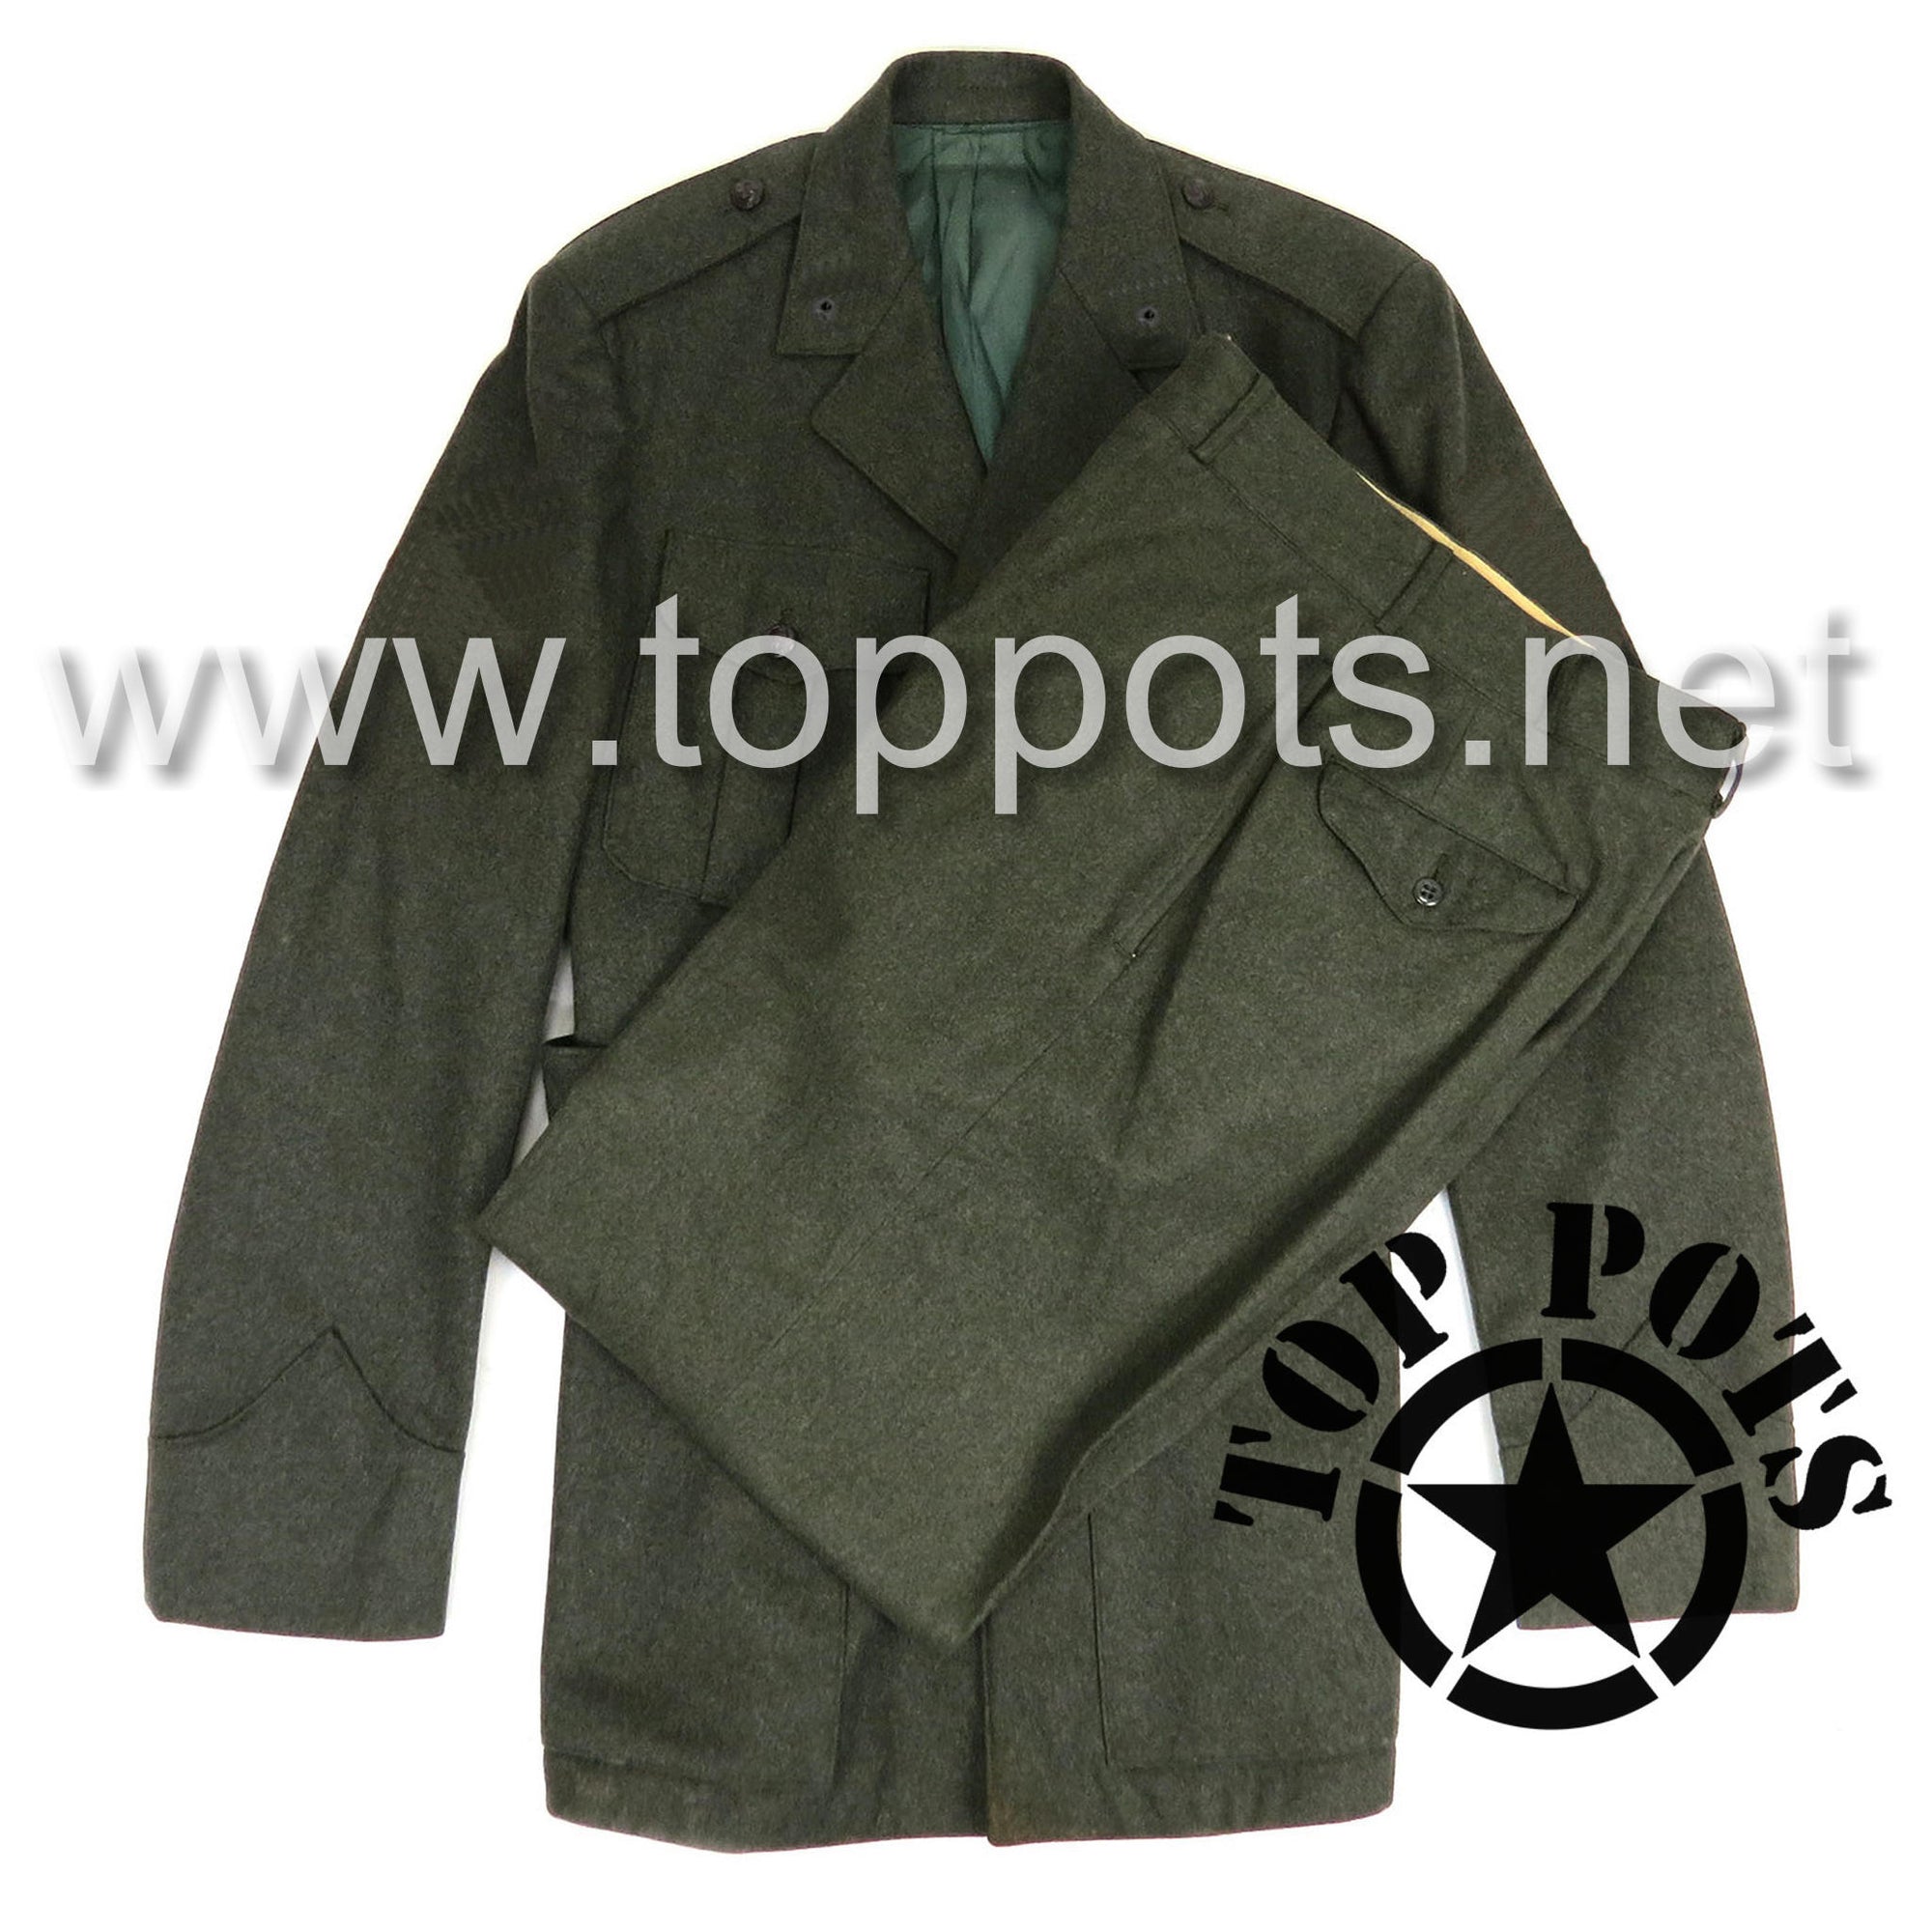 WWII USMC Reproduction M1937 Green Wool Marine Corps Service Dress Coat Jacket & Pant Uniform Set (Jacket and Pants)